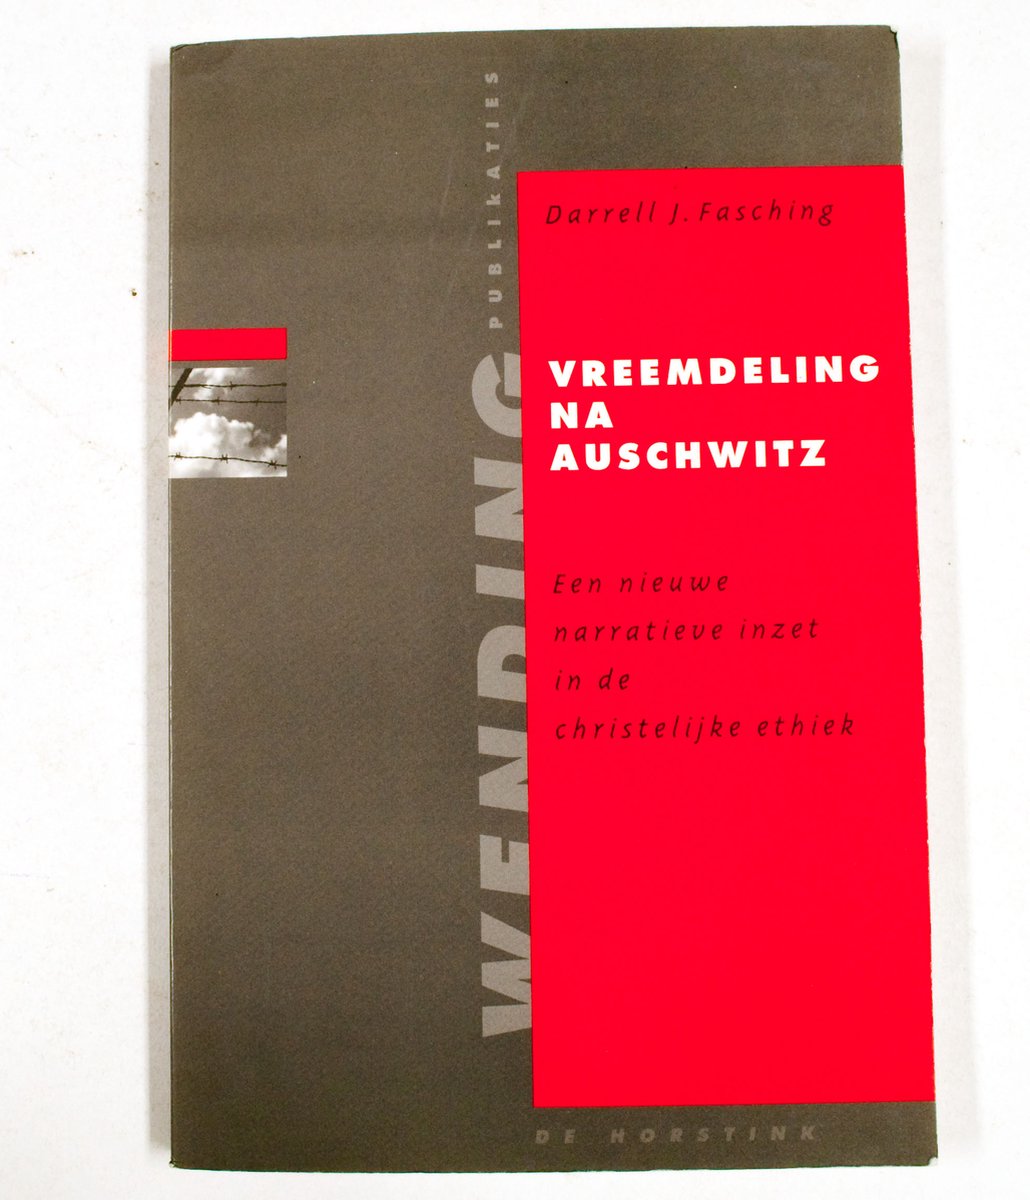 Vreemdeling na Auschwitz / Wending-publikaties